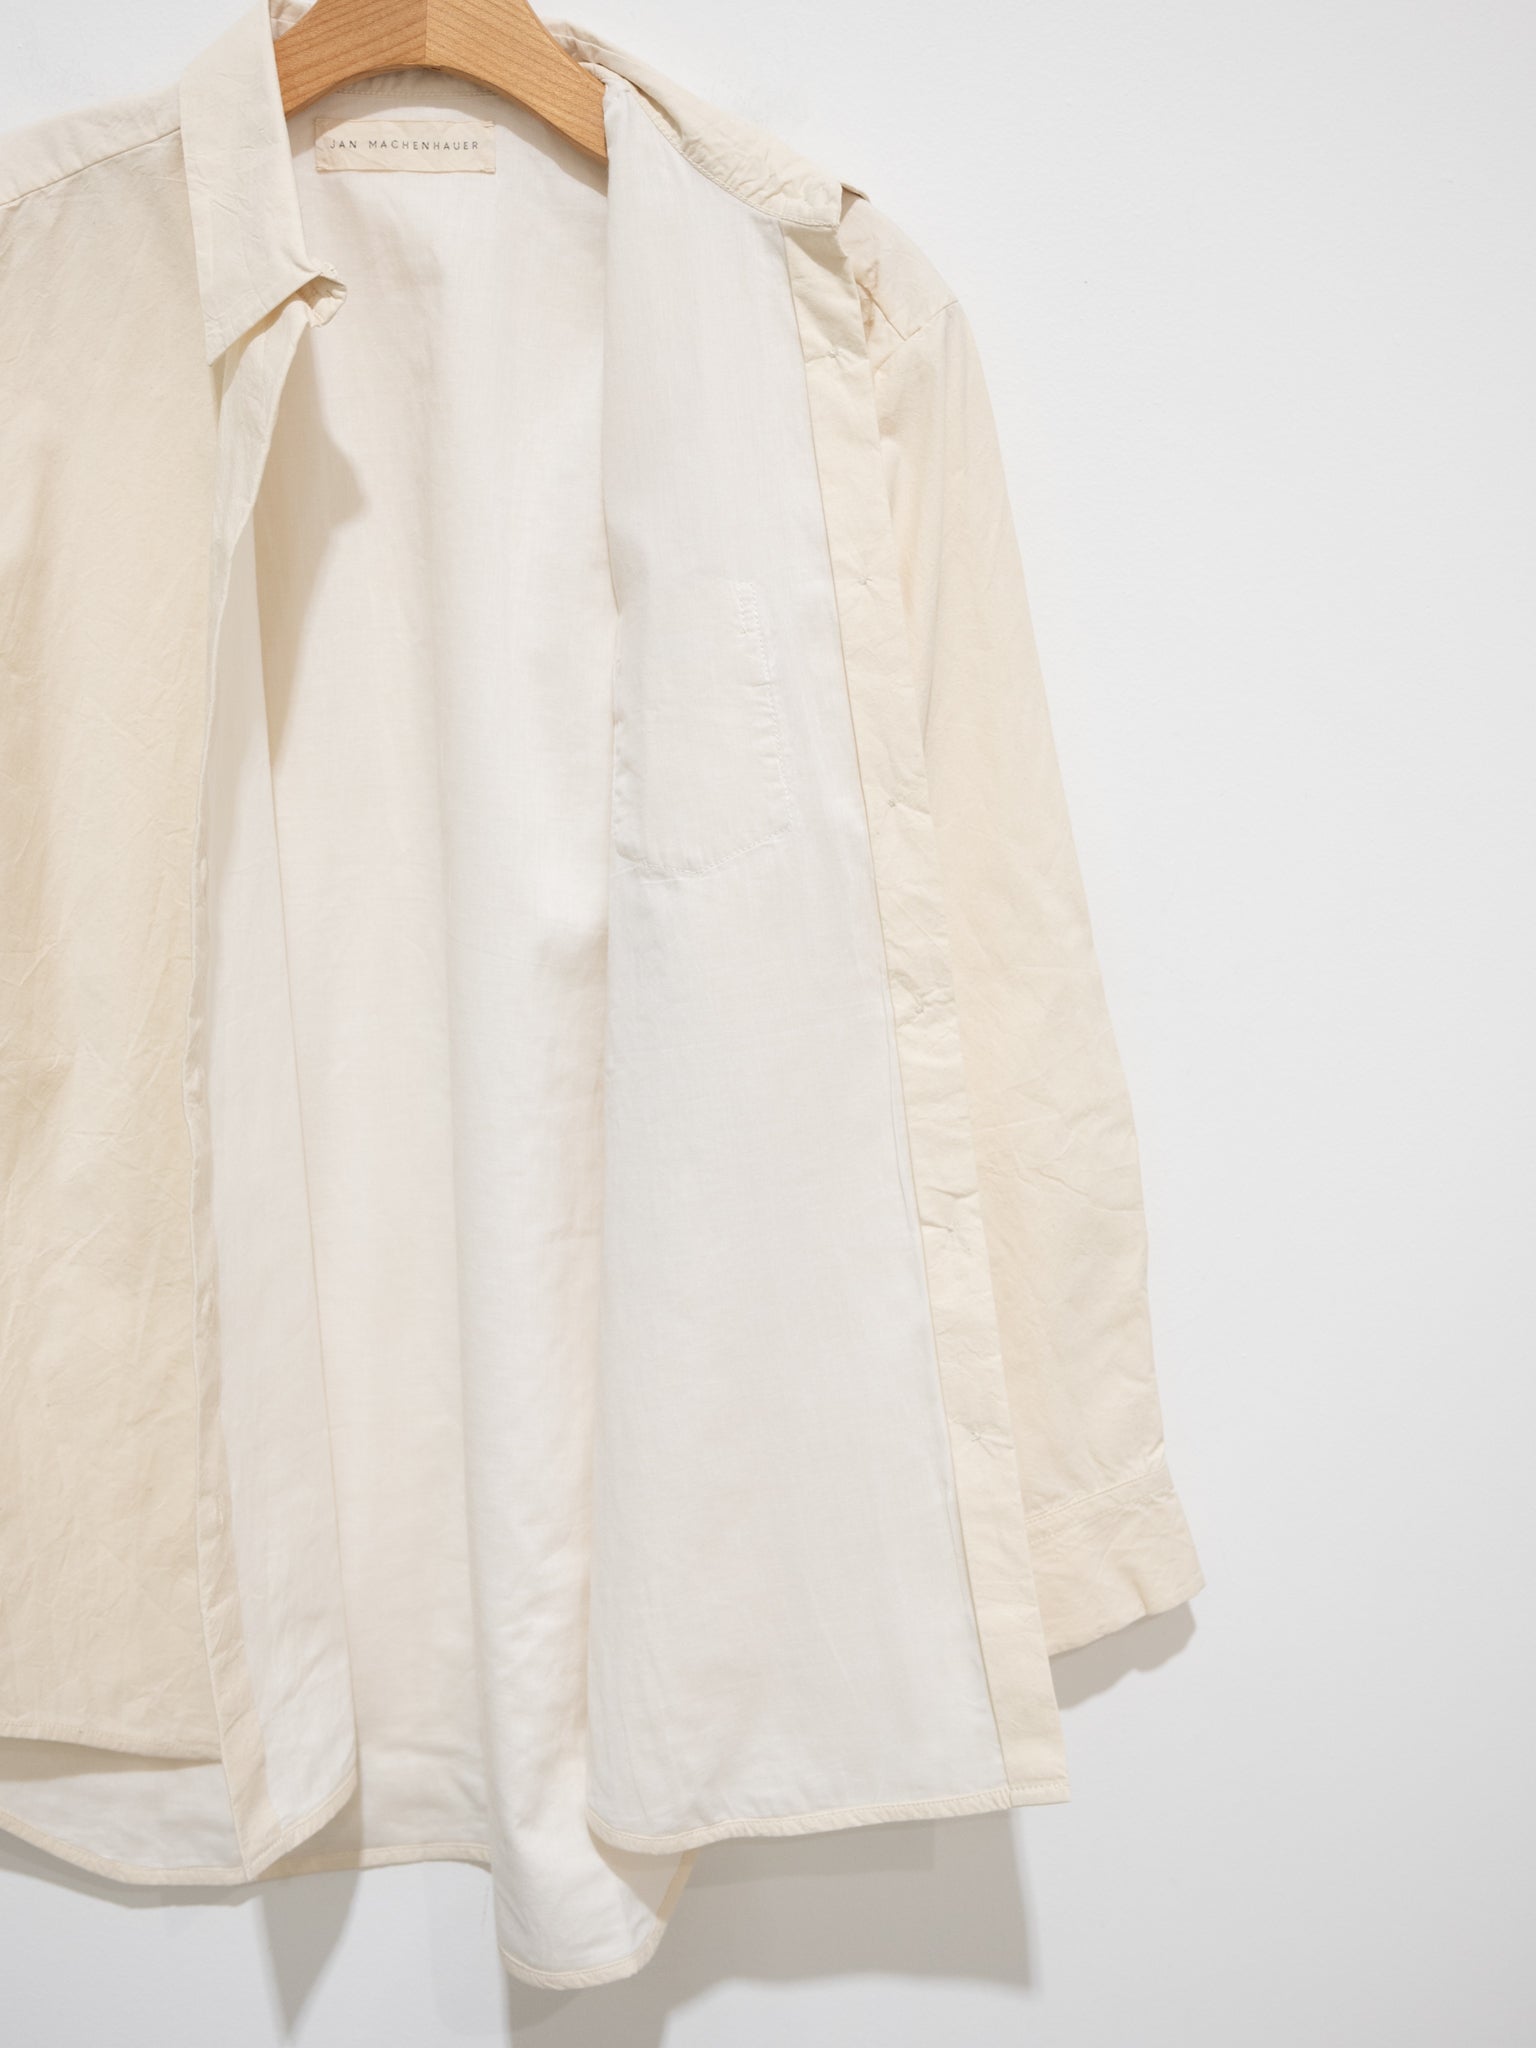 Namu Shop - Jan Machenhauer Galla Shirt - Organic Cotton Poplin Lined